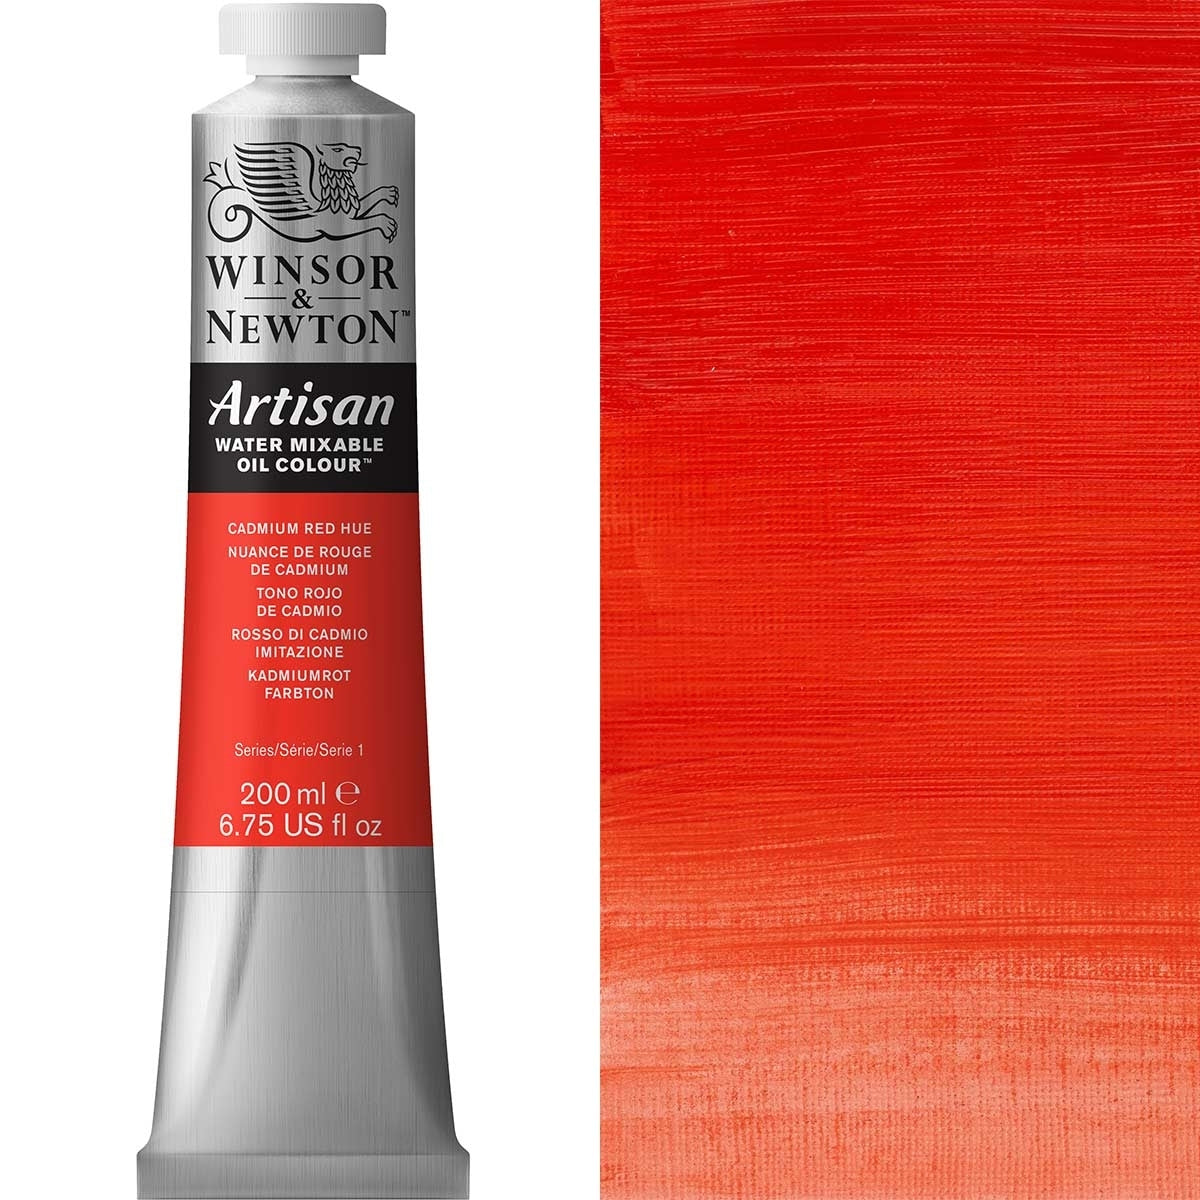 Winsor en Newton - Artisan Oil Color Water Mixable - 200 ml - Cadmium Red Hue